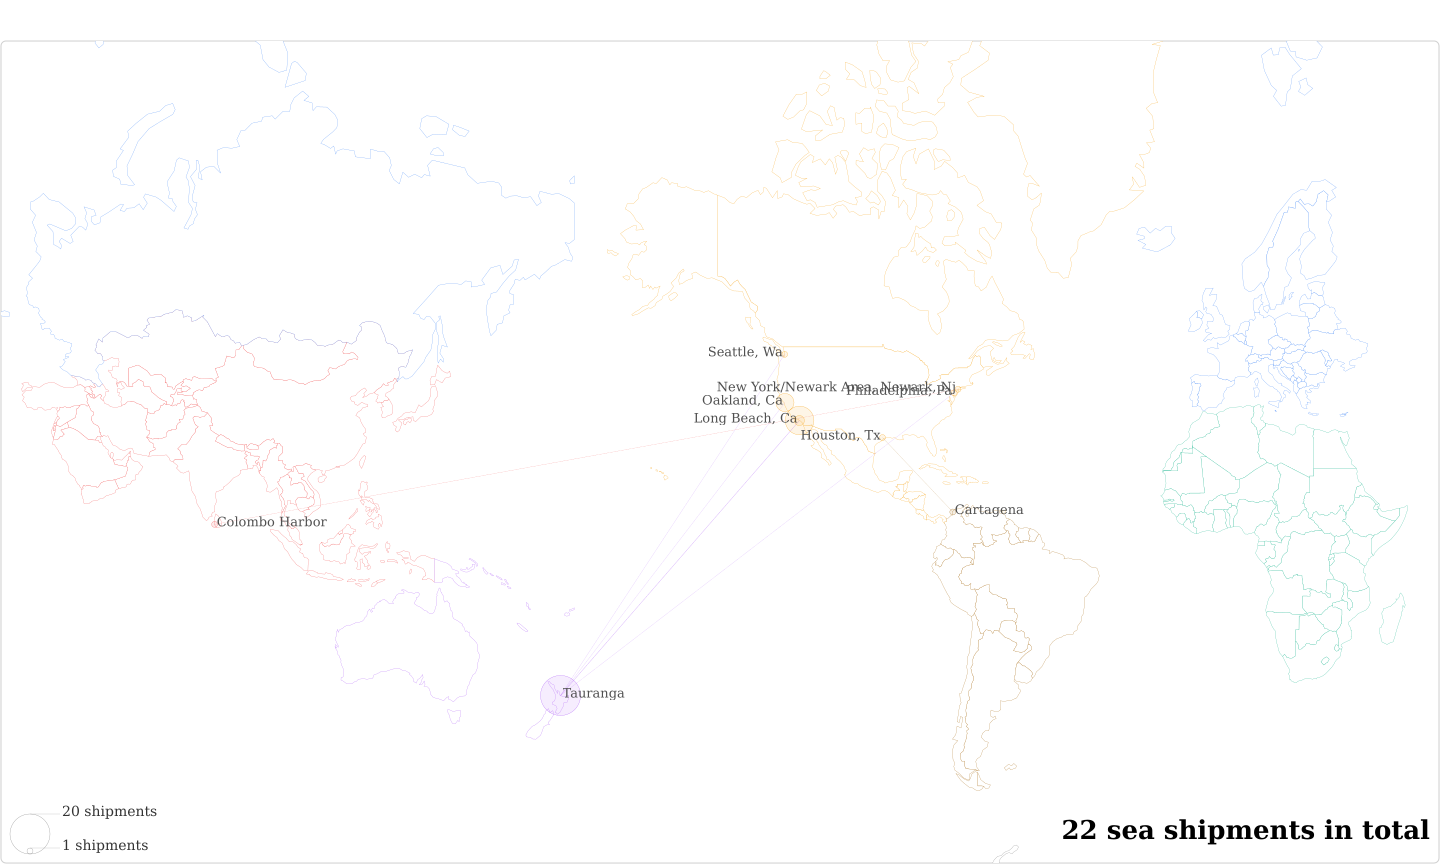 Technopak's Imports Per Country Map